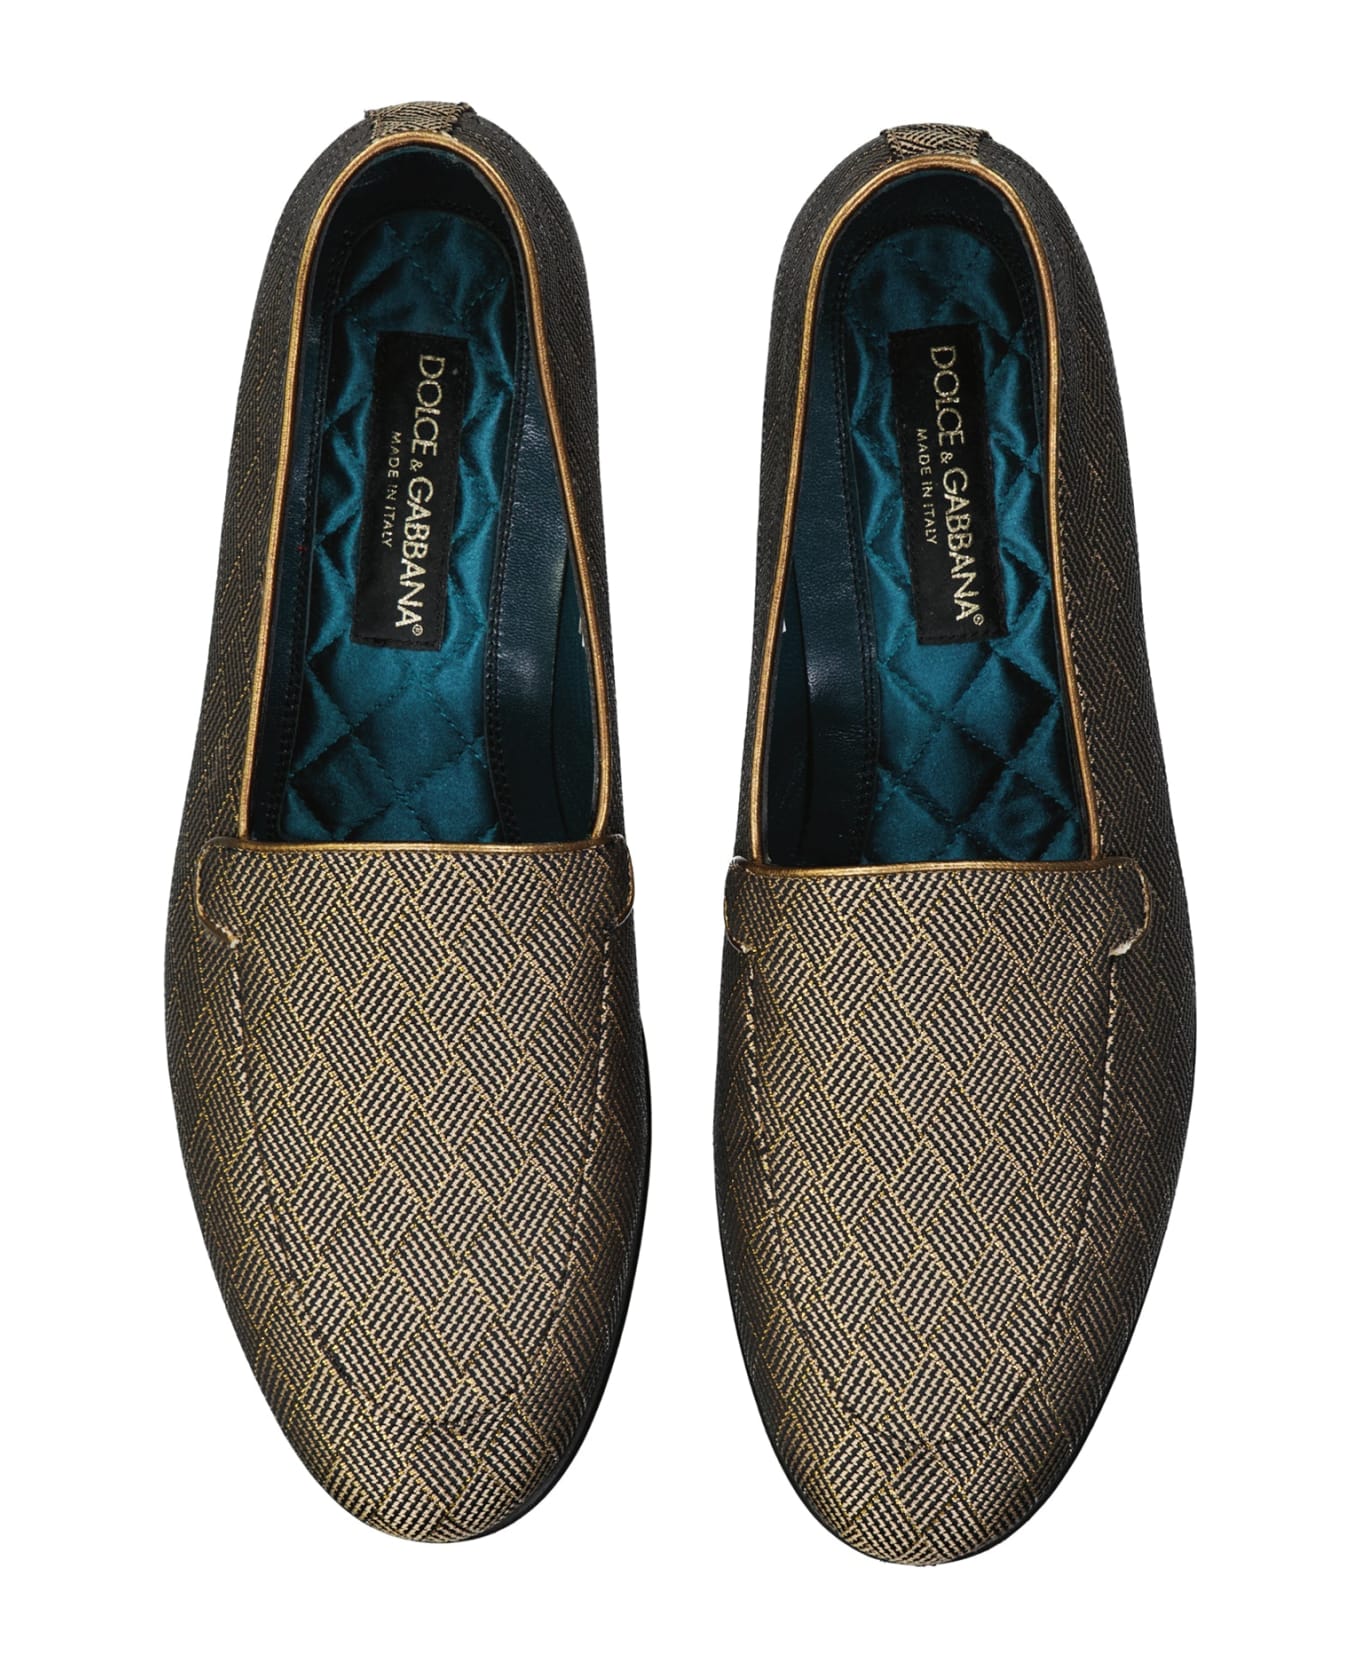 Dolce & Gabbana Jaquard Loafers - Beige